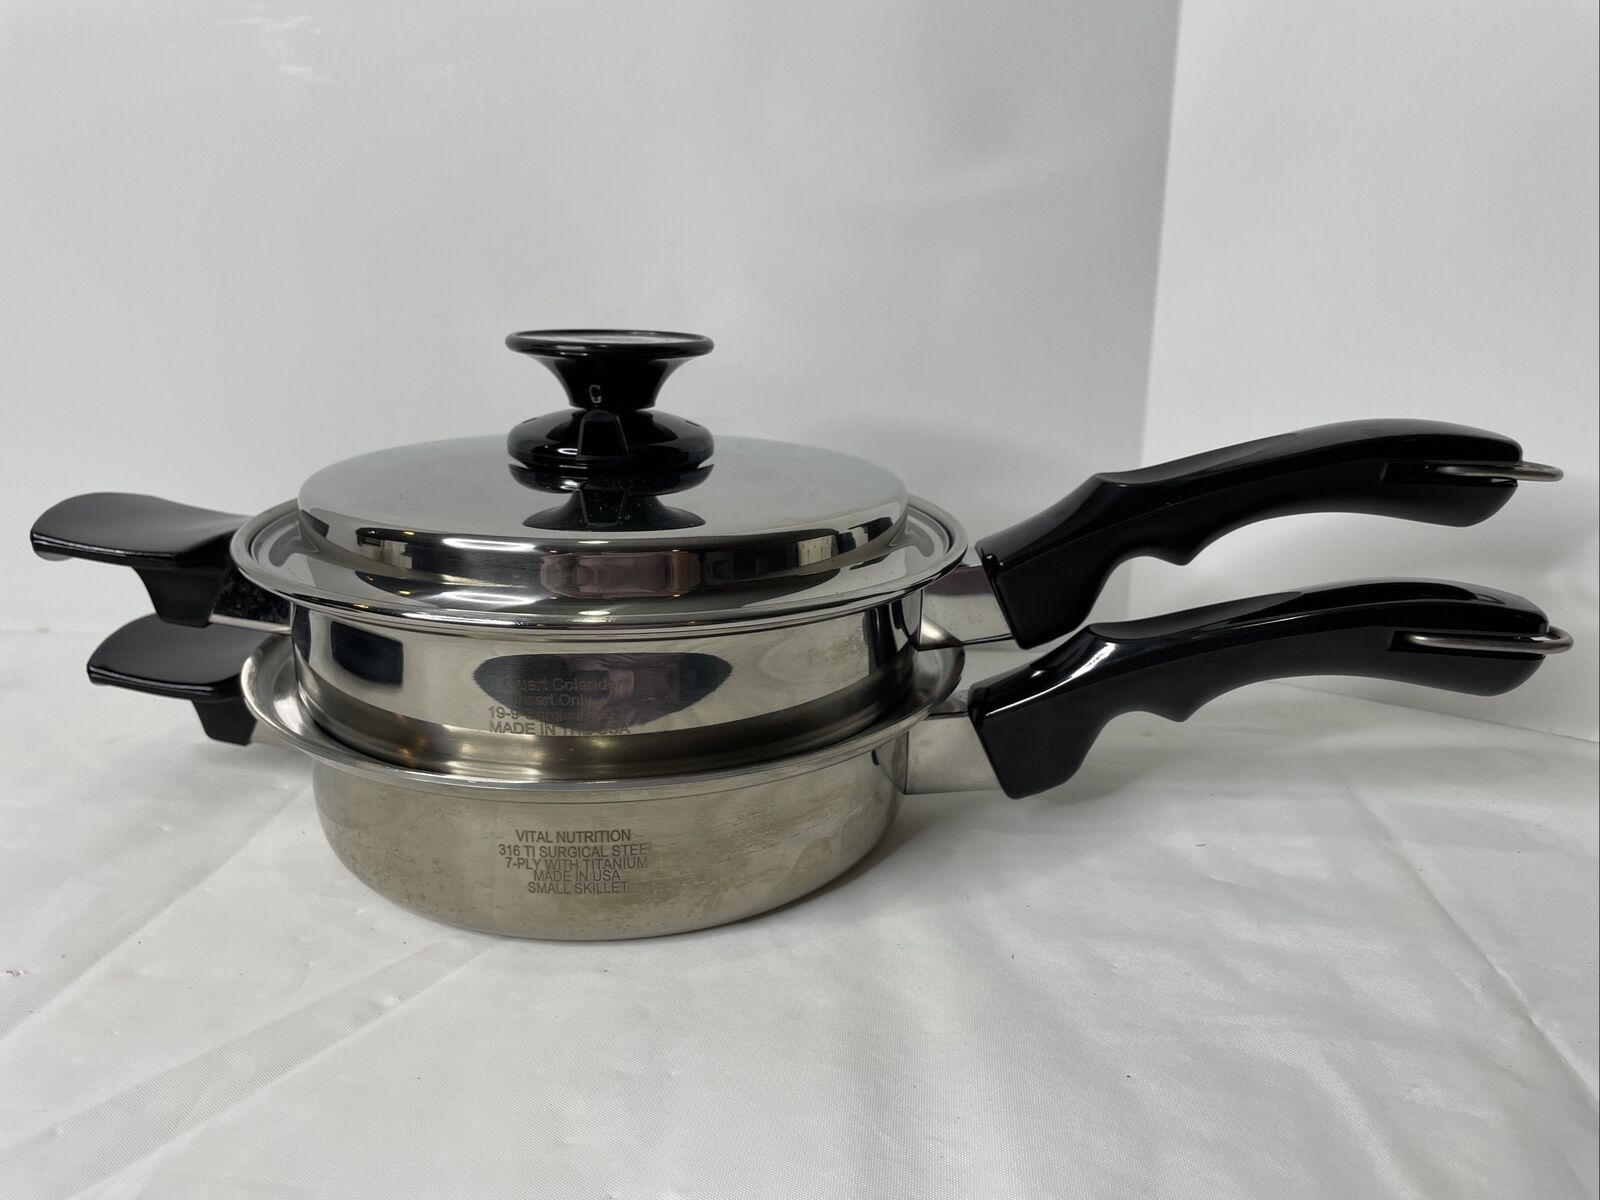 VITAL NUTRITION 3 QUART Colander Steamer Pan Set With LID Surgical Steel USA